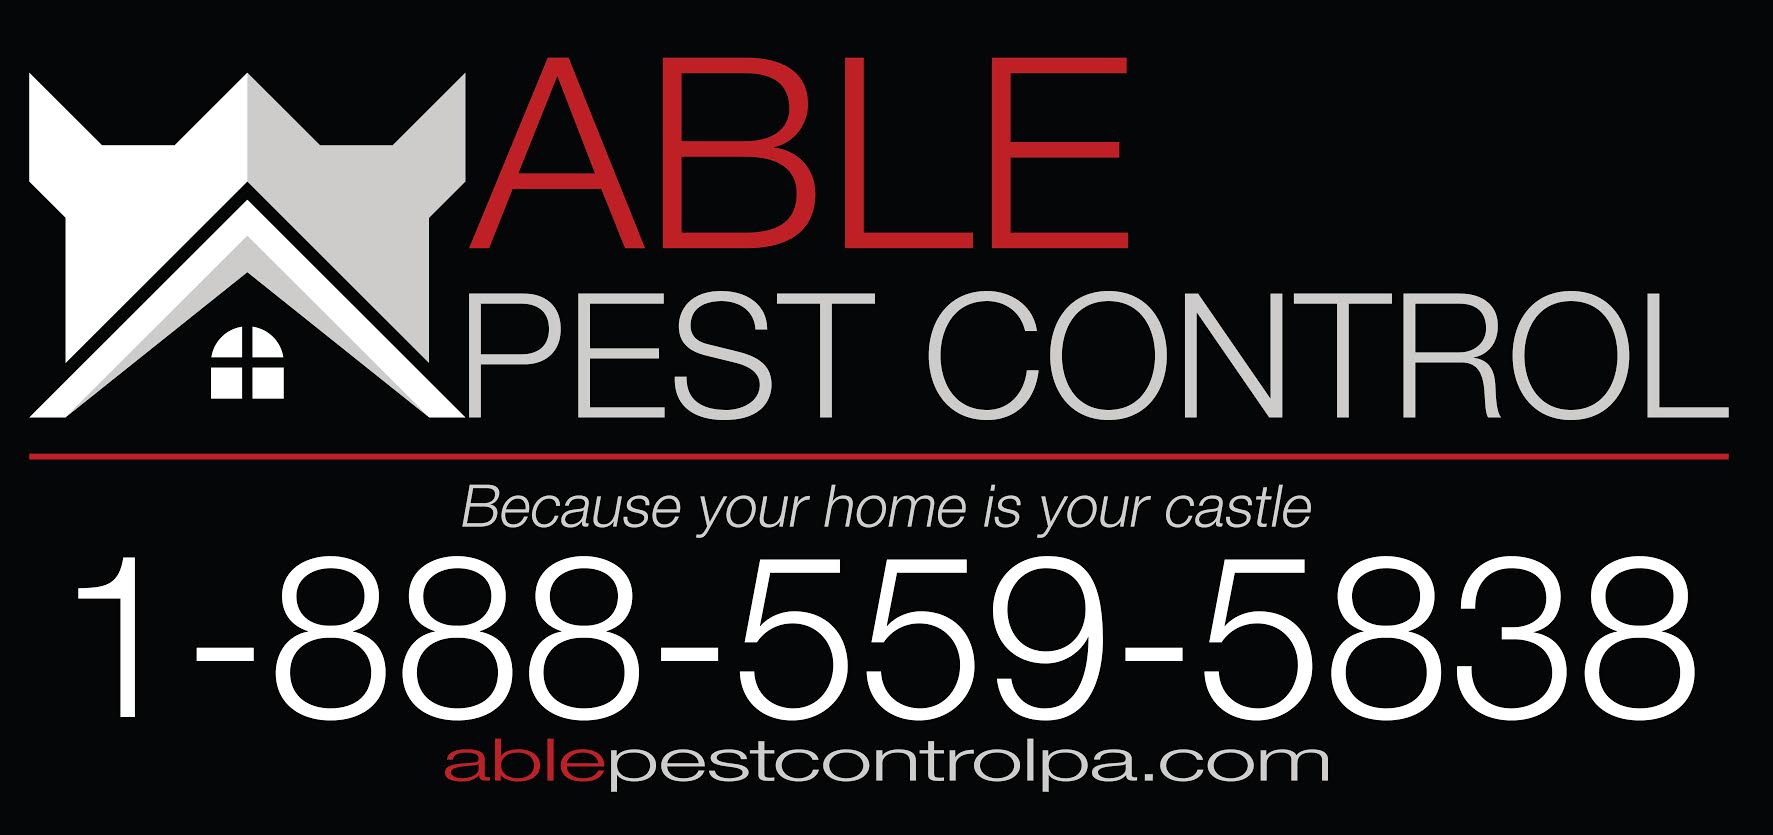 ABLE Pest Control 139 Pavia Rd, Imler Pennsylvania 16655